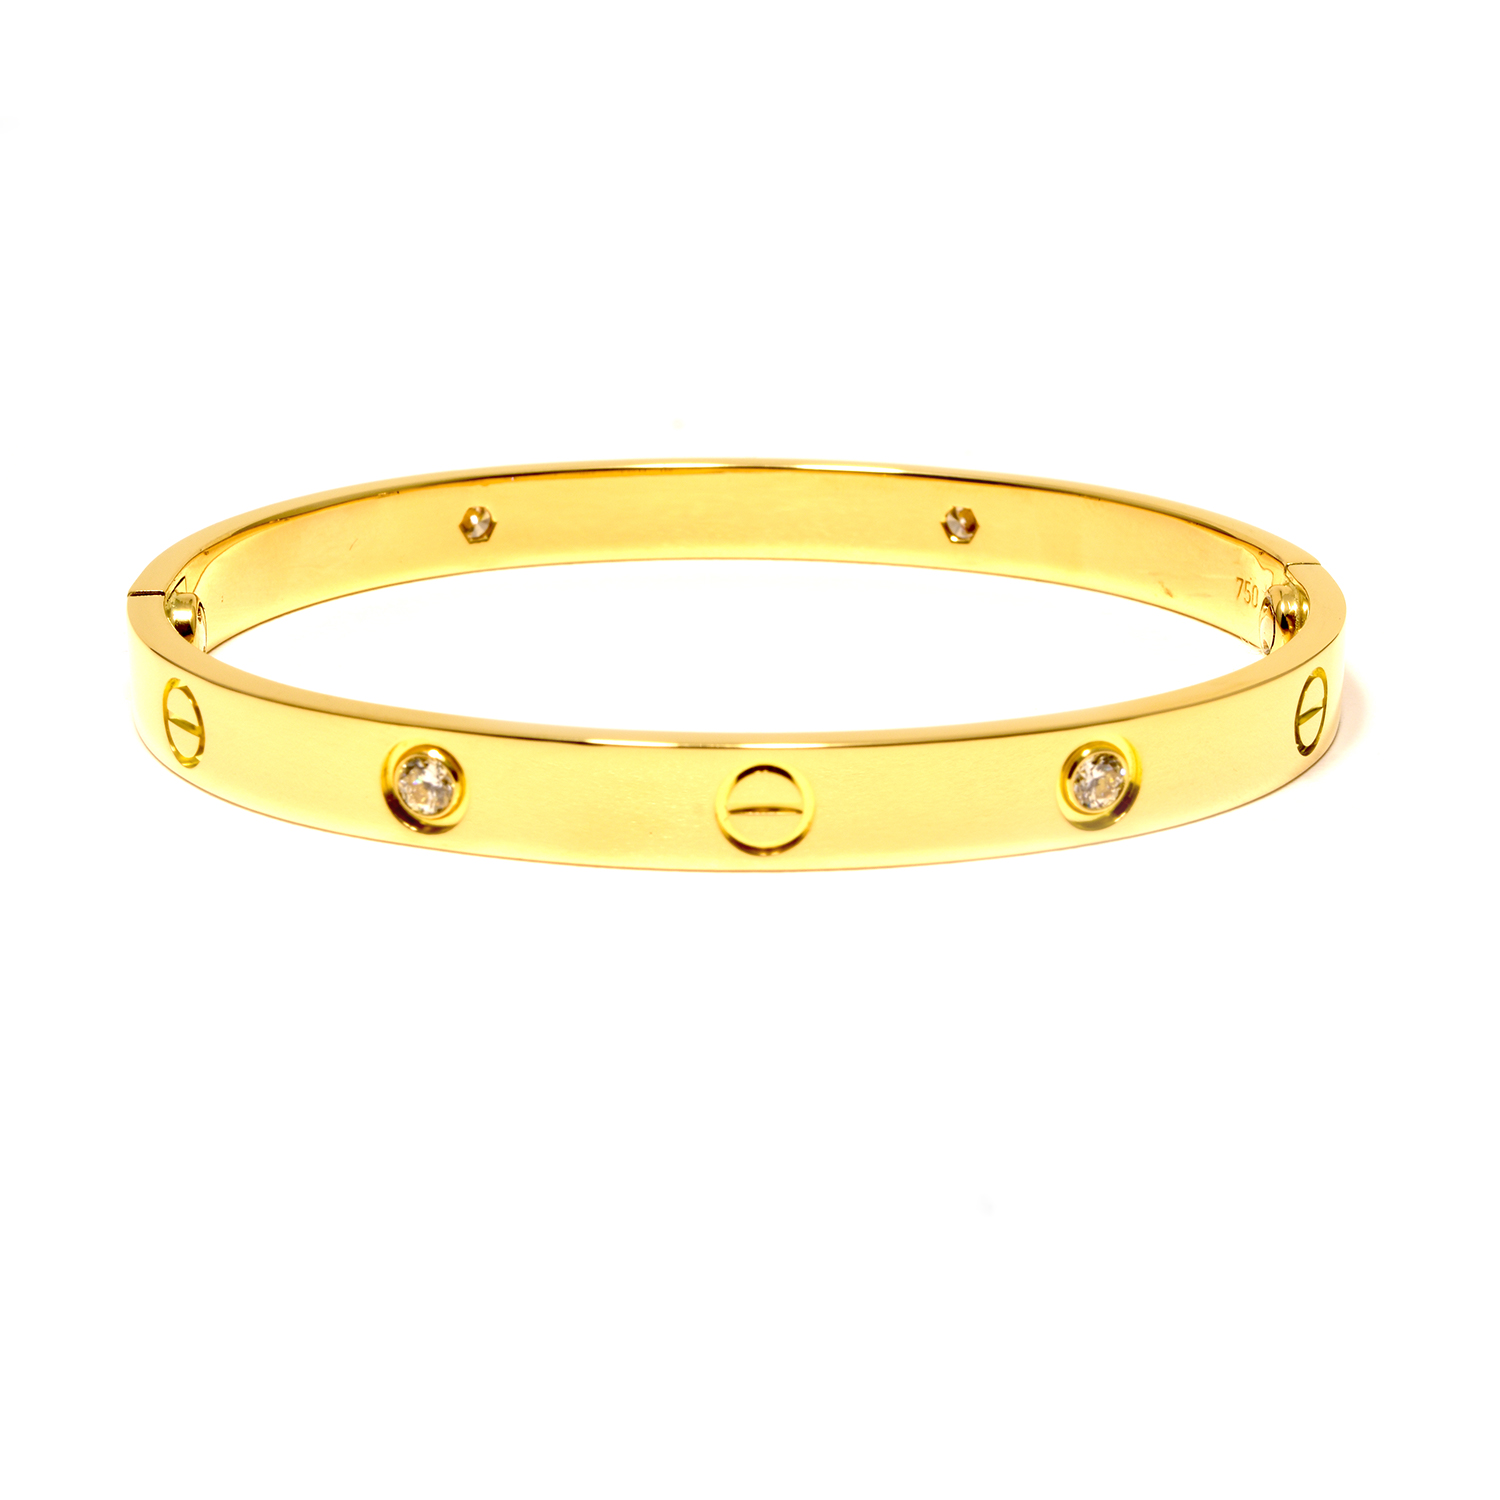 #LOVE# bracelet, 4 diamonds